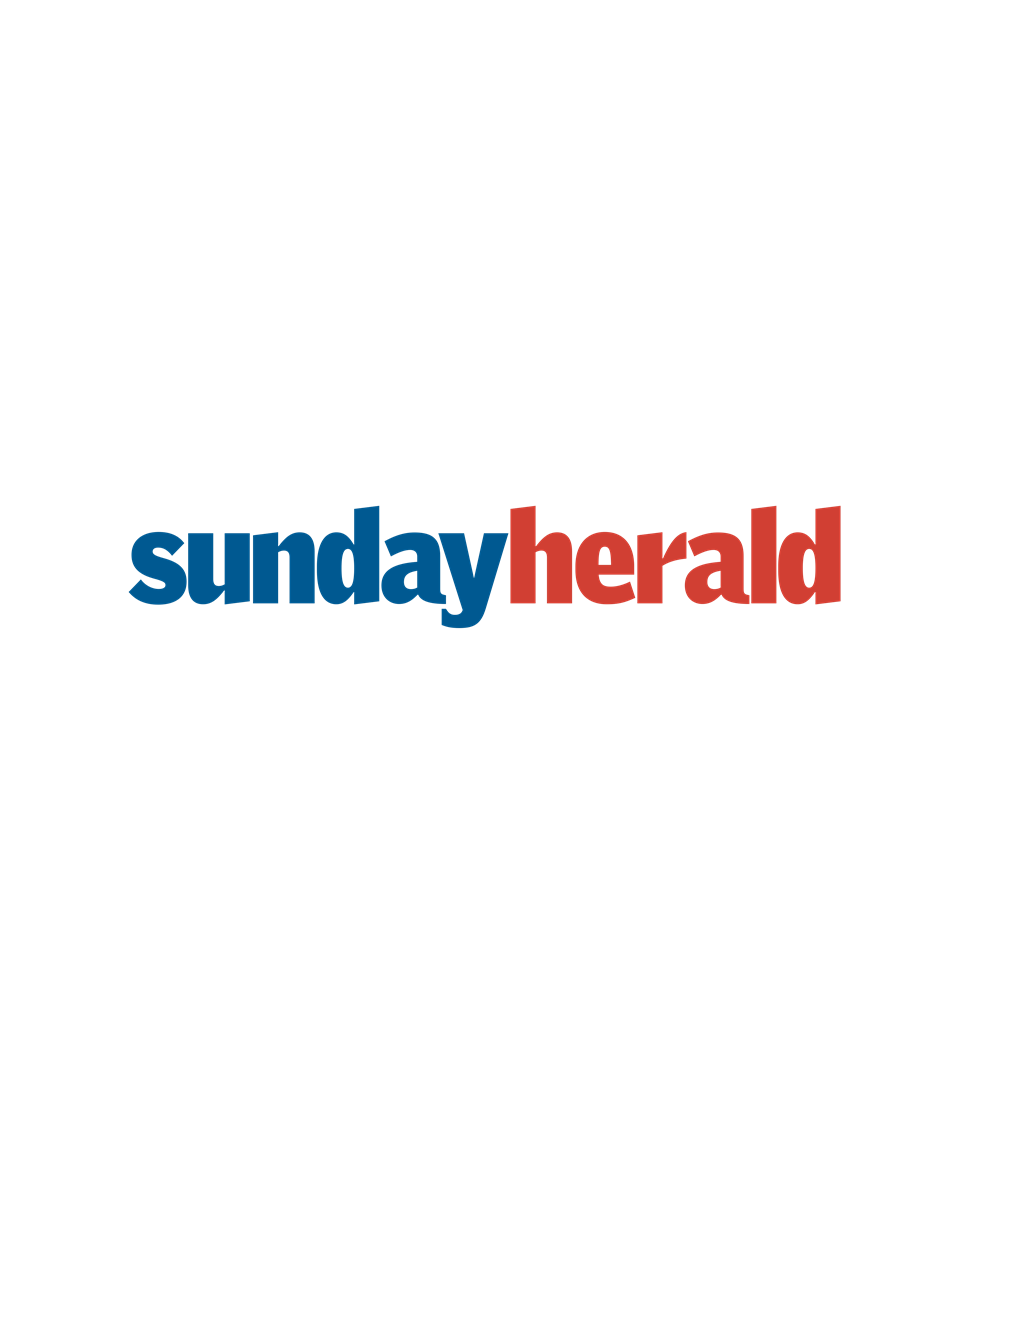 Sunday Herald logotype, transparent .png, medium, large